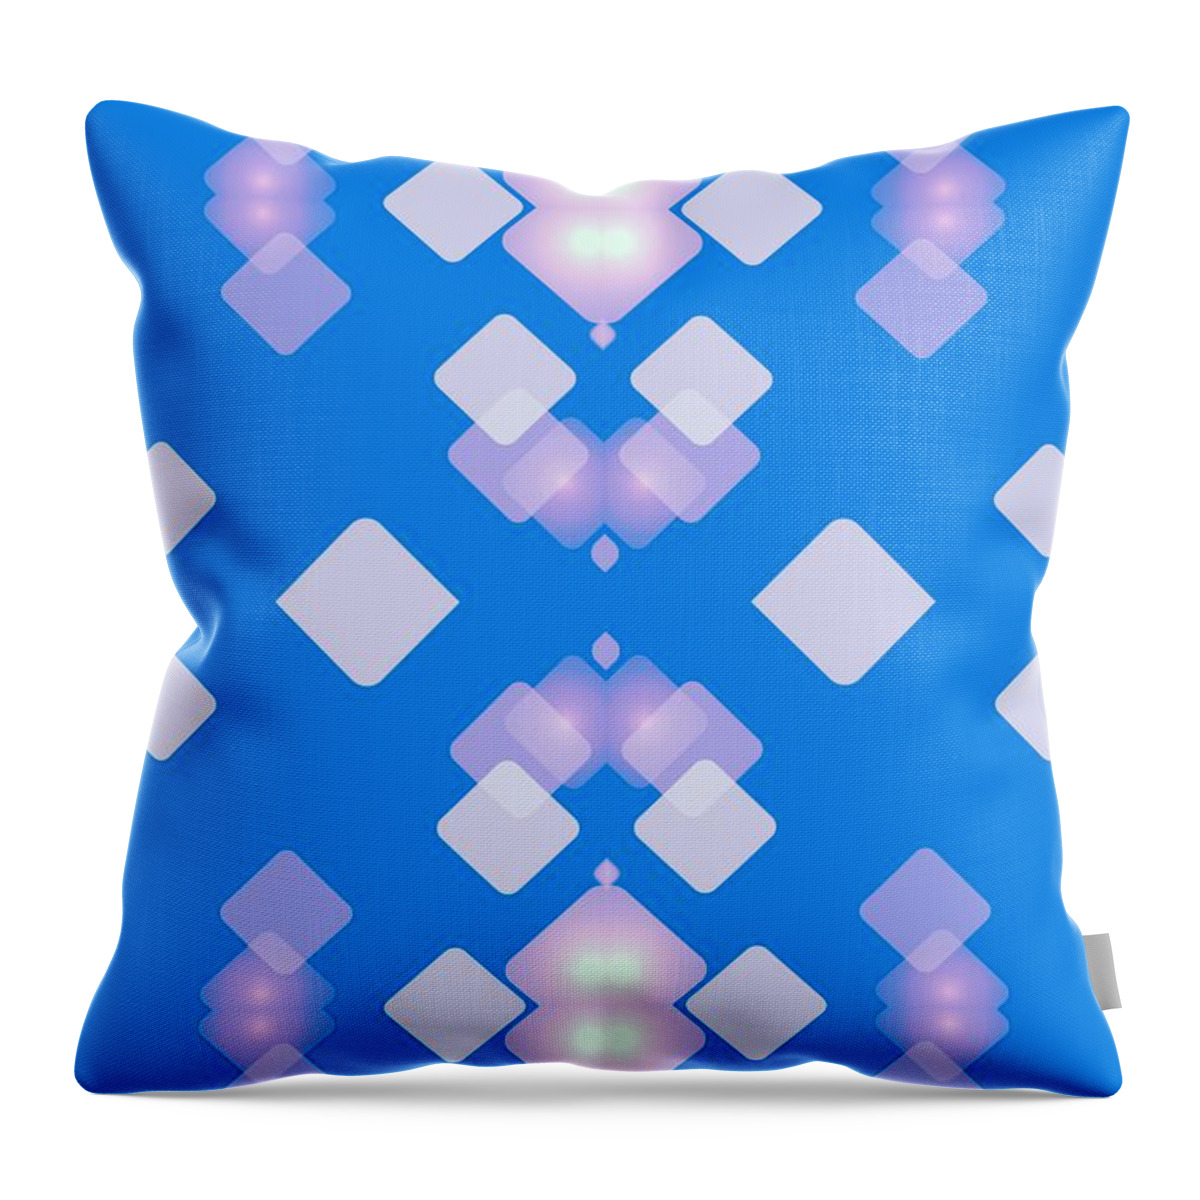 Blue Throw Pillow featuring the digital art Light Dreams In Blue by Rachel Hannah